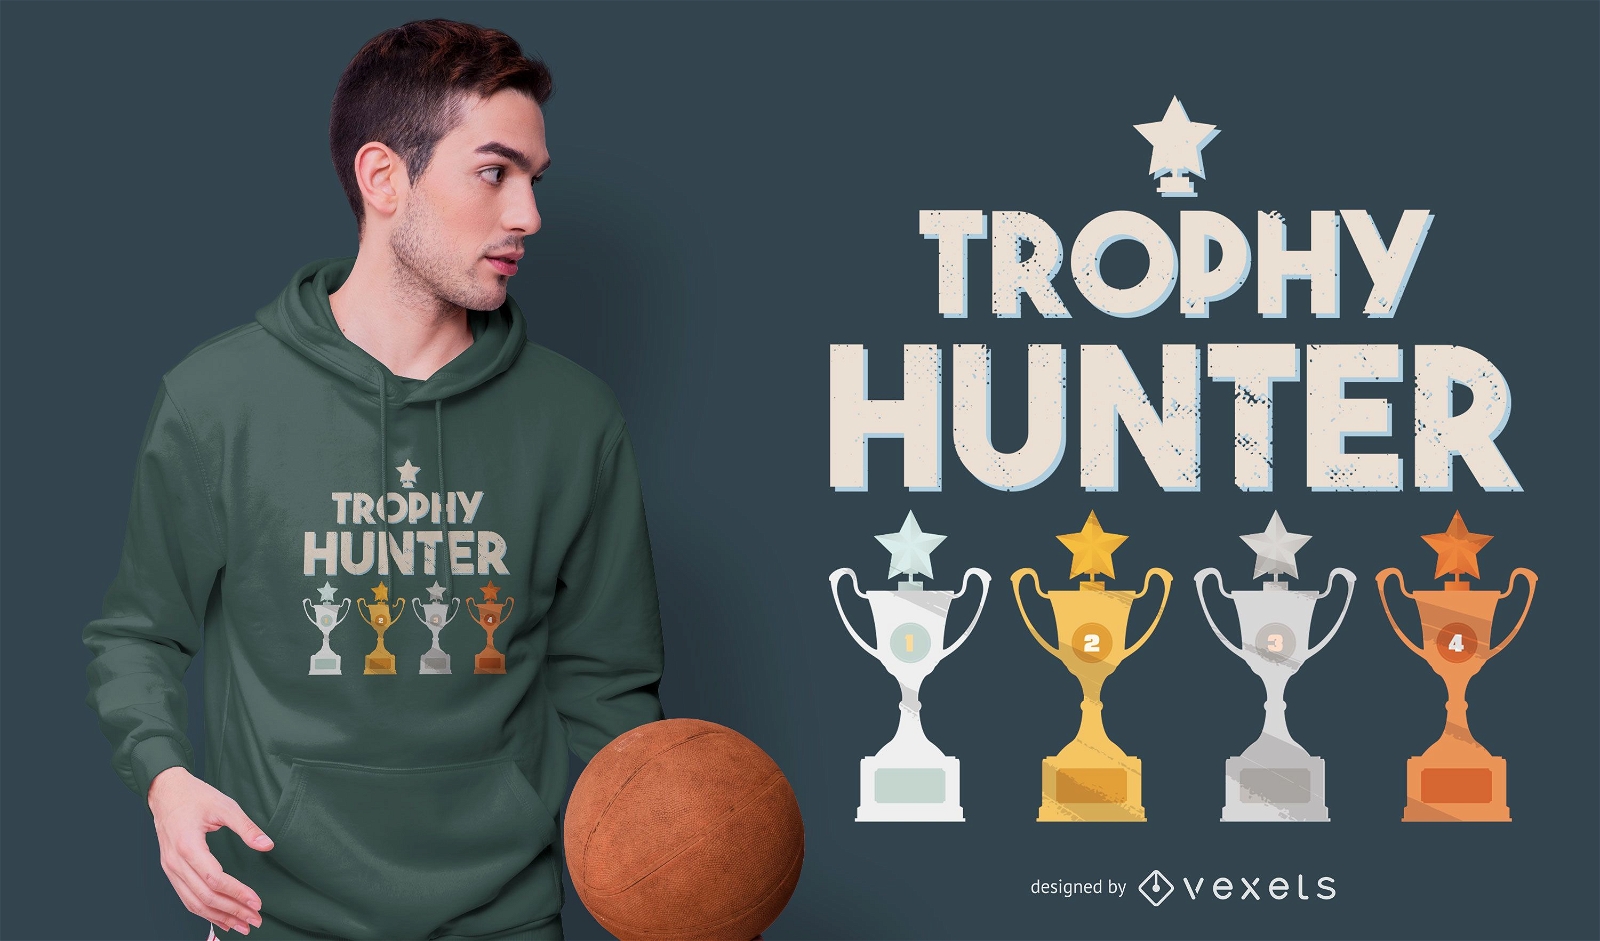 Trophy hunter t-shirt design